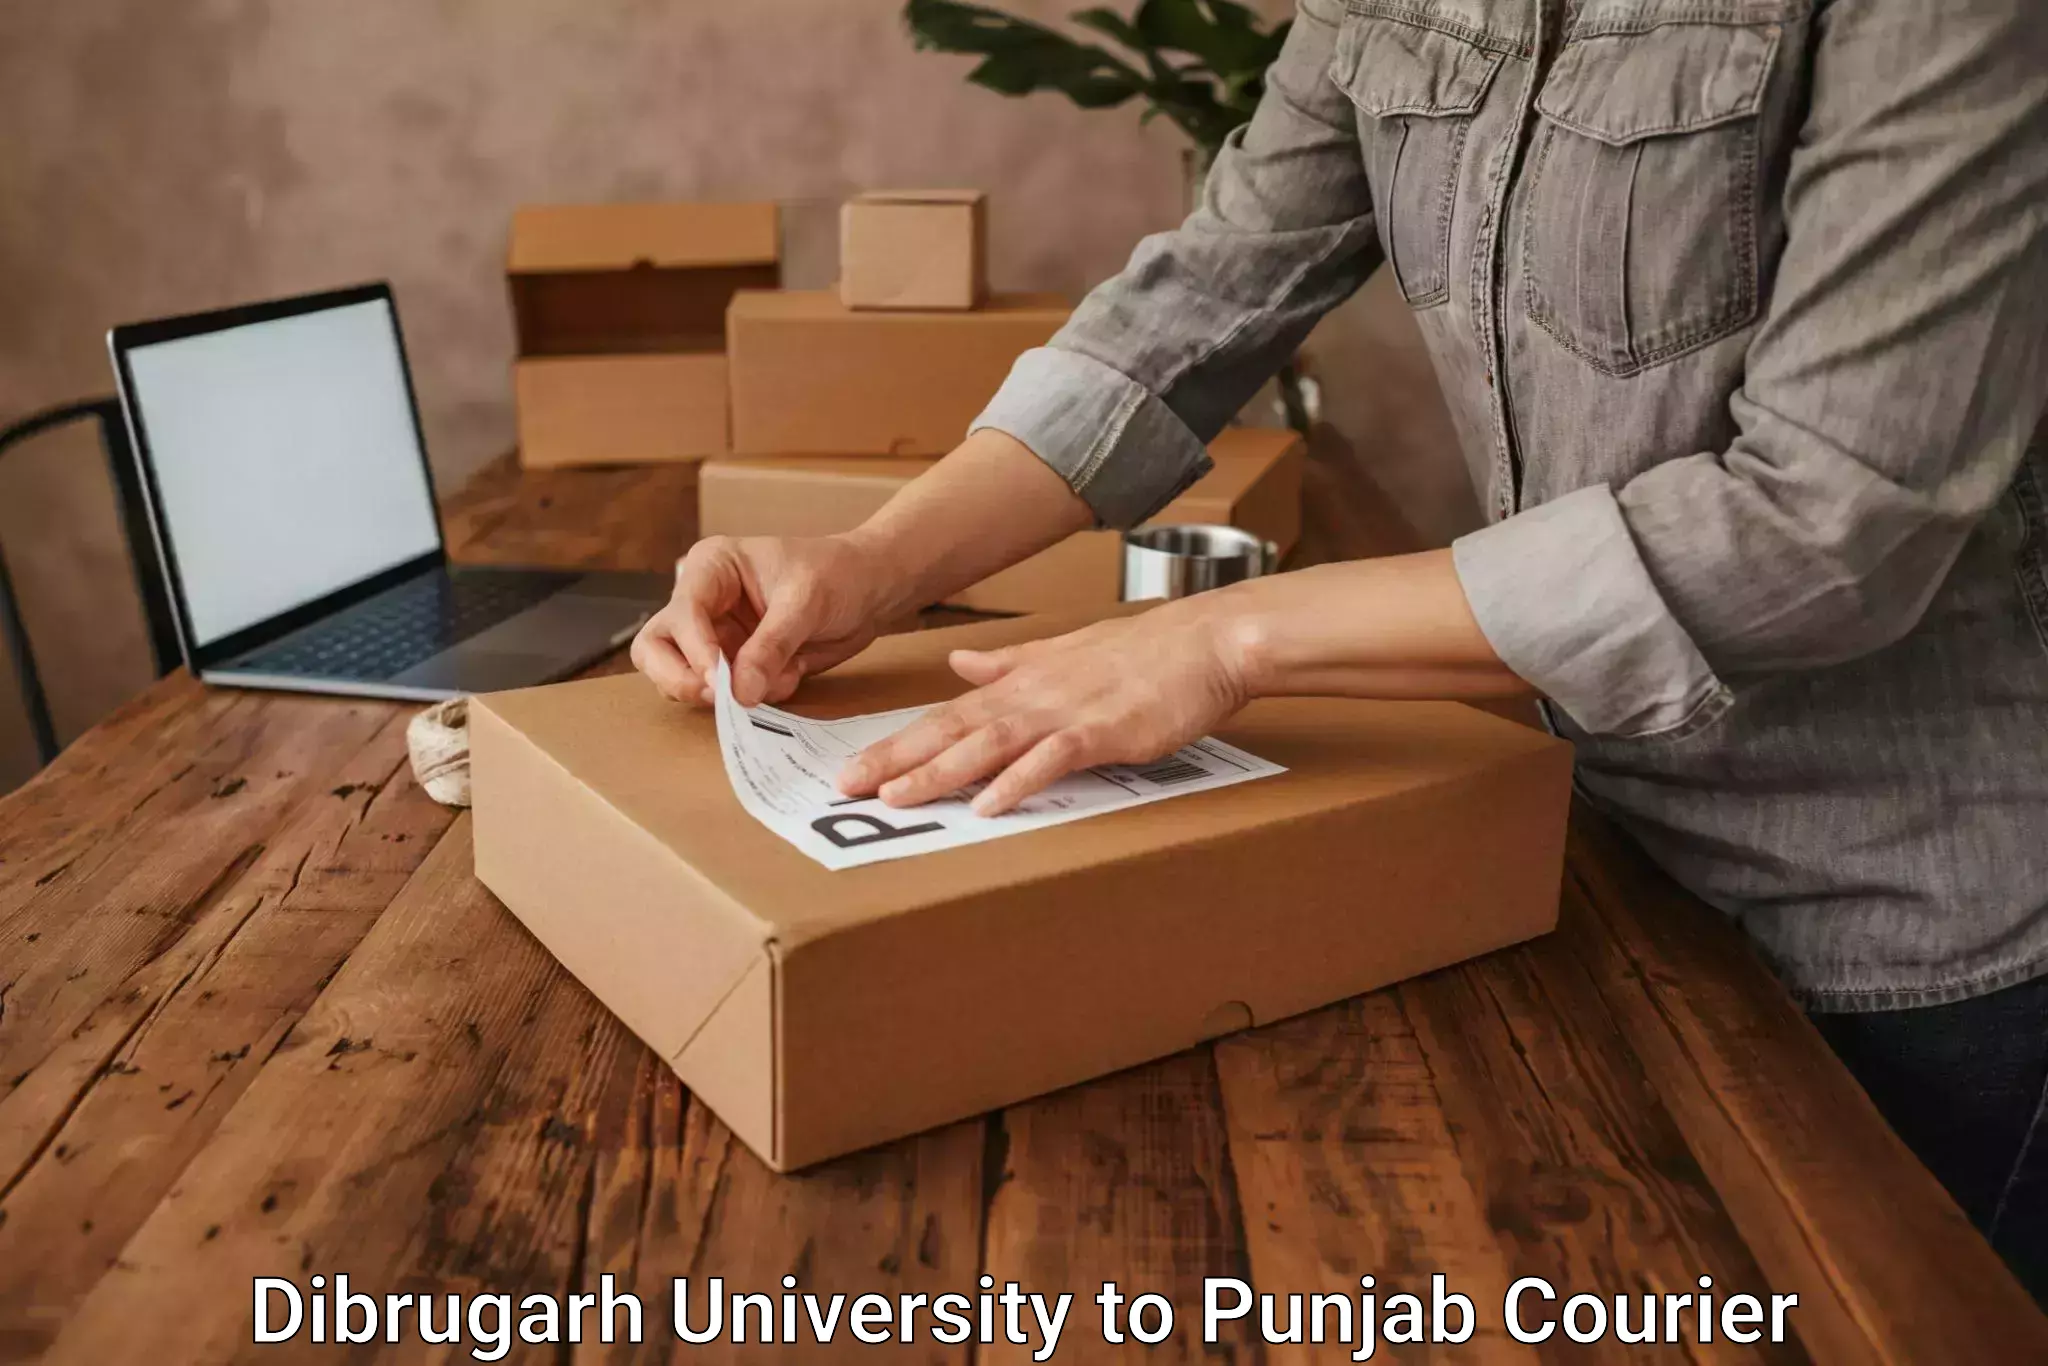 Courier service comparison Dibrugarh University to Ropar